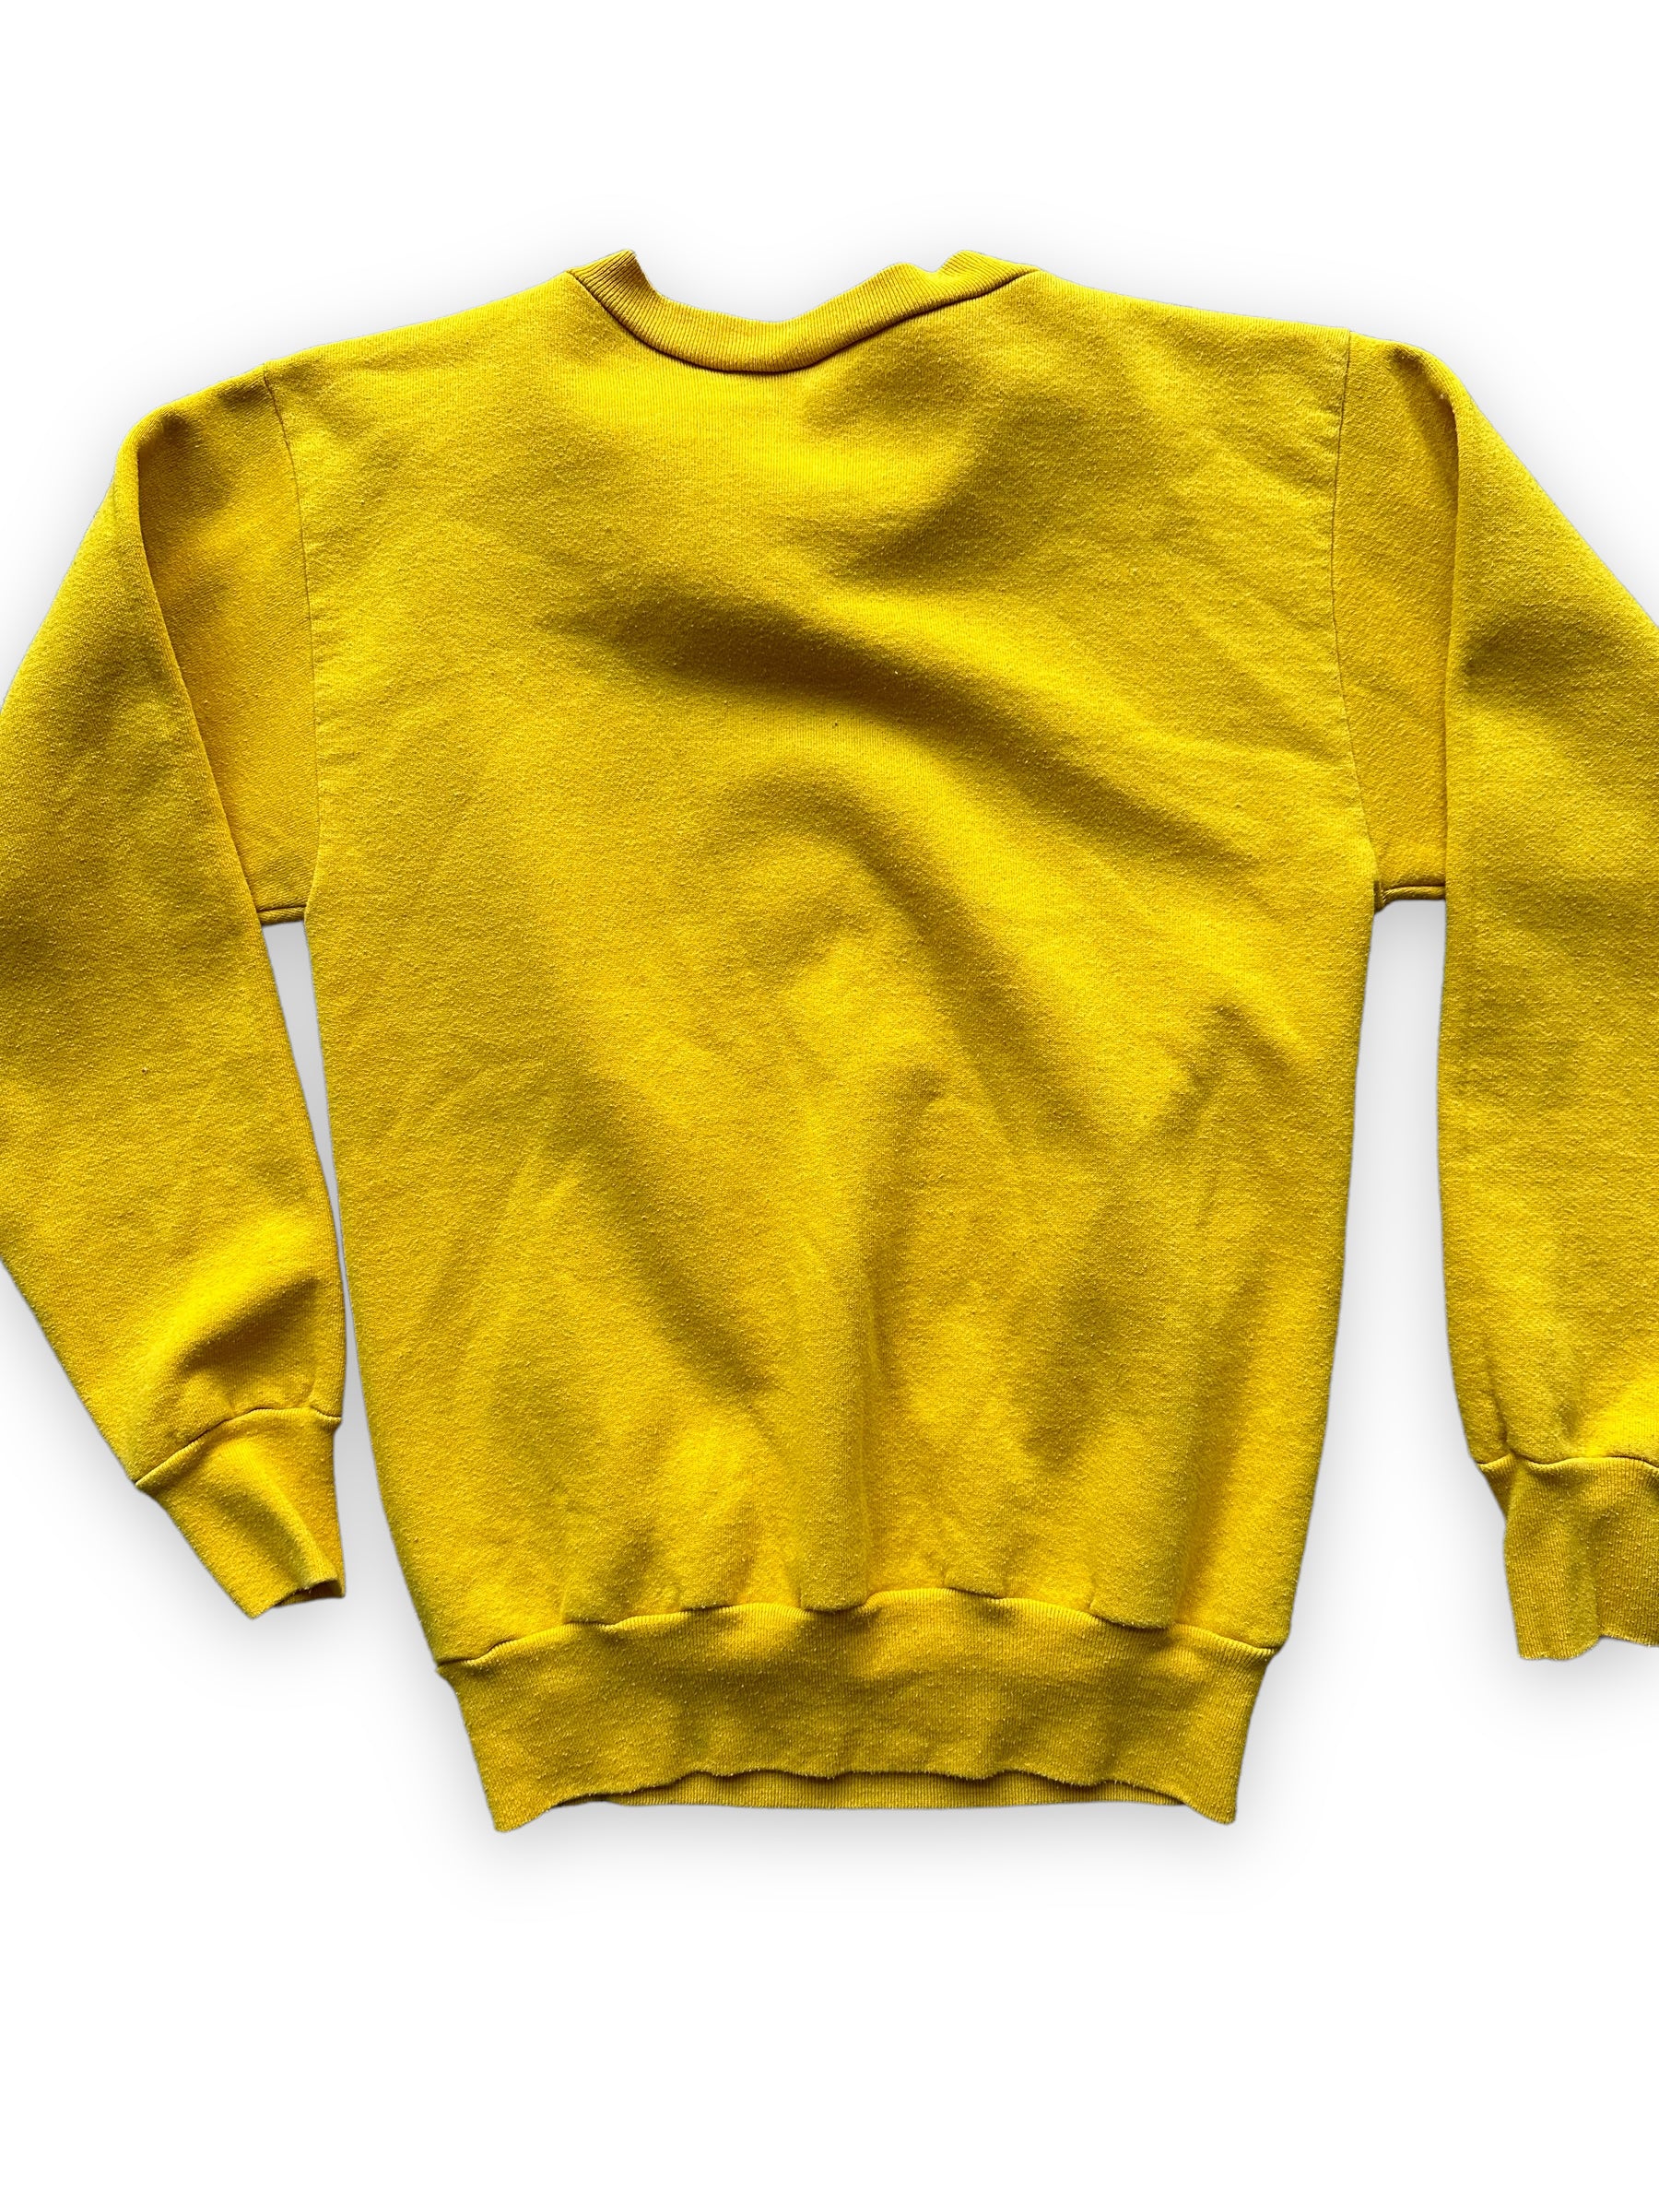 Rear Detail on Vintage Yellow Wyoming Crewneck Sweatshirt SZ M | Vintage Crewneck Sweatshirt Seattle | Barn Owl Vintage Seattle